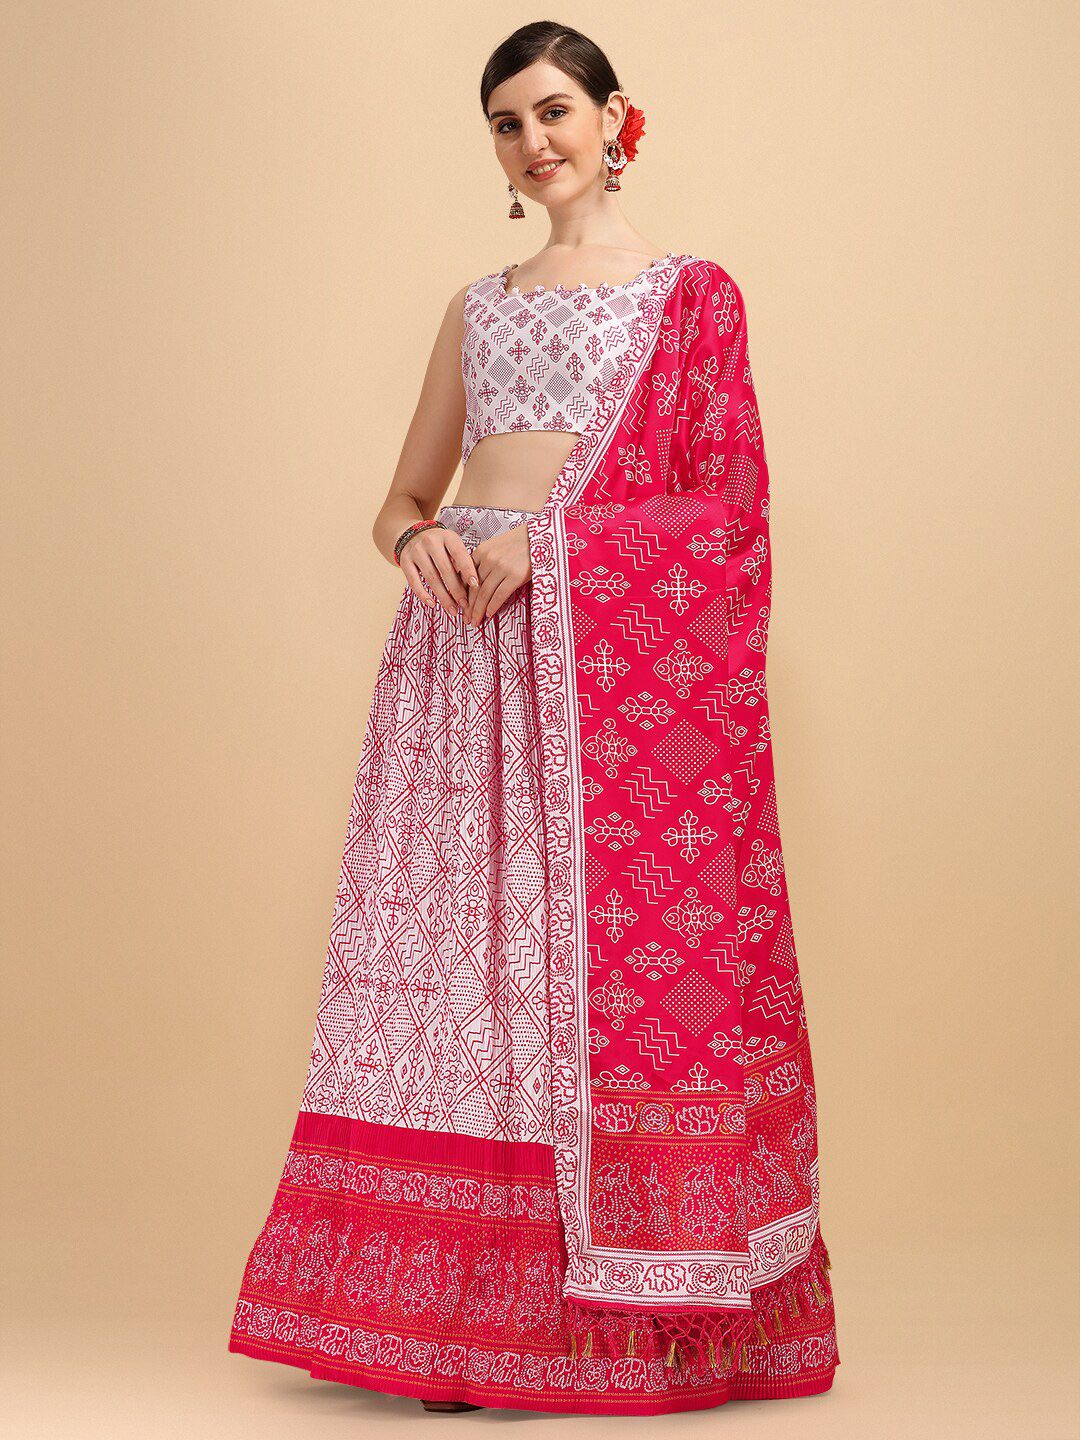 Amrutam Fab Women White, Pink Printed Semi-Stitched Lehenga, Unstitched Blouse & Dupatta Price in India